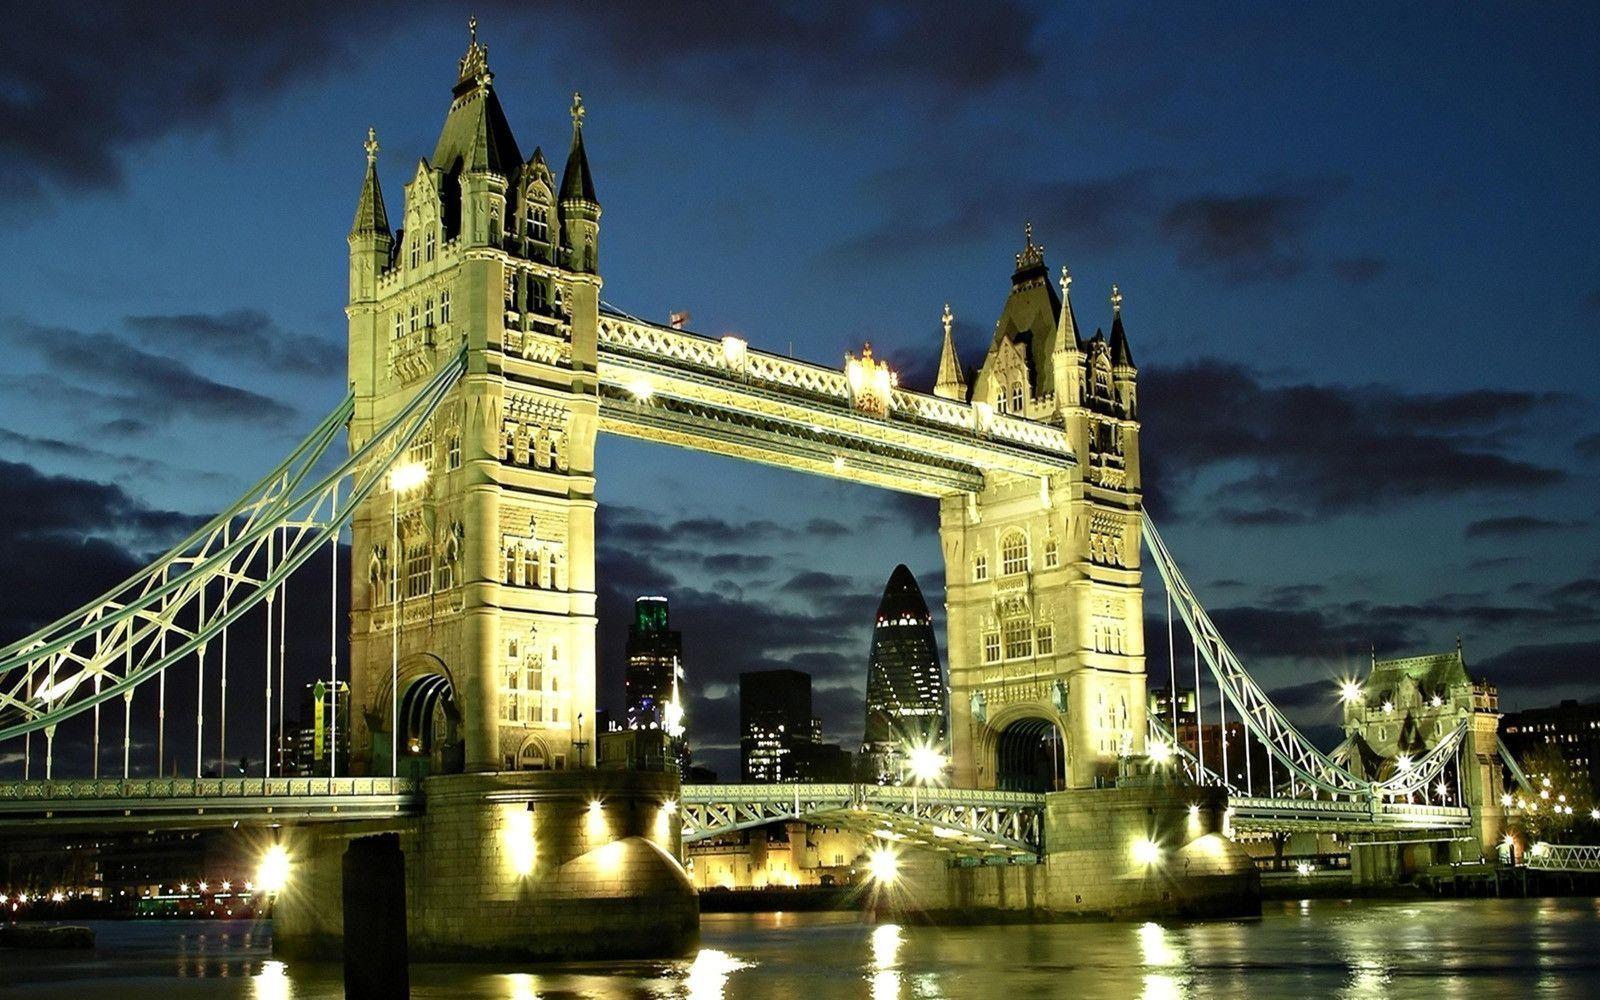 Tower Bridge HD Wallpaper. Tower Bridge Image Free